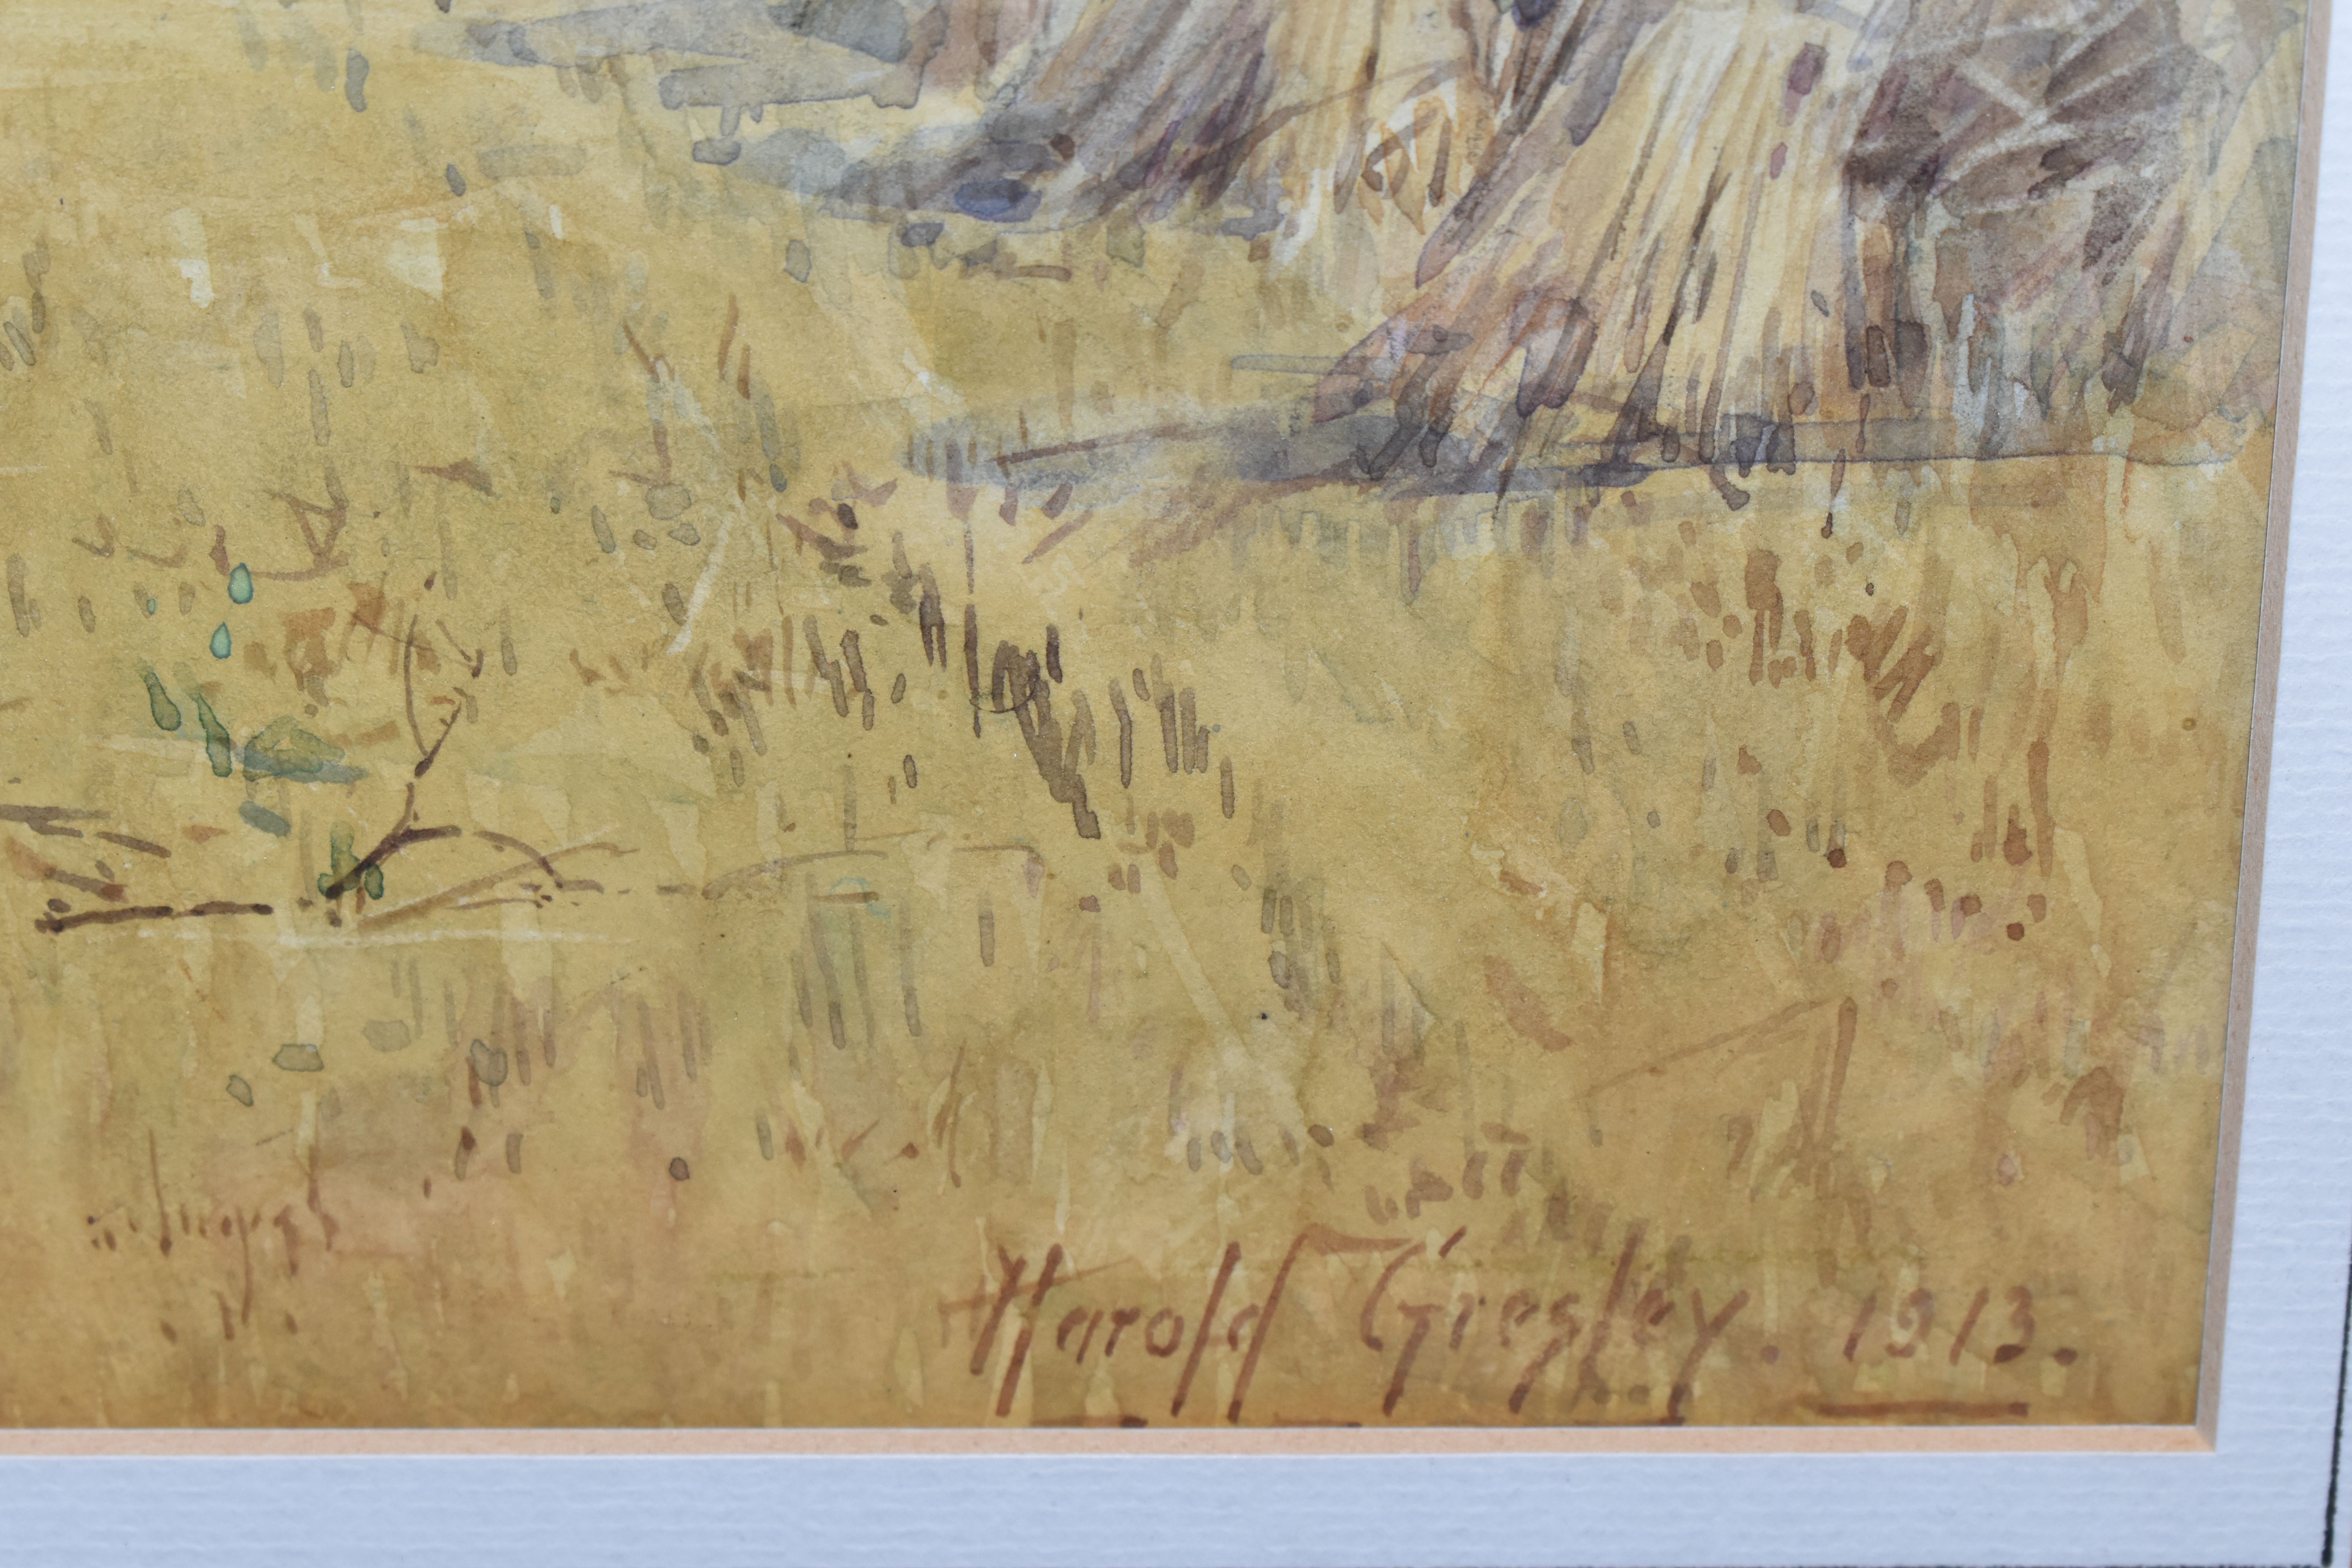 HAROLD GRESLEY (1892-1962) 'HARVESTING NEAR KINGS MILLS', a picturesque landscape depicting - Image 4 of 4